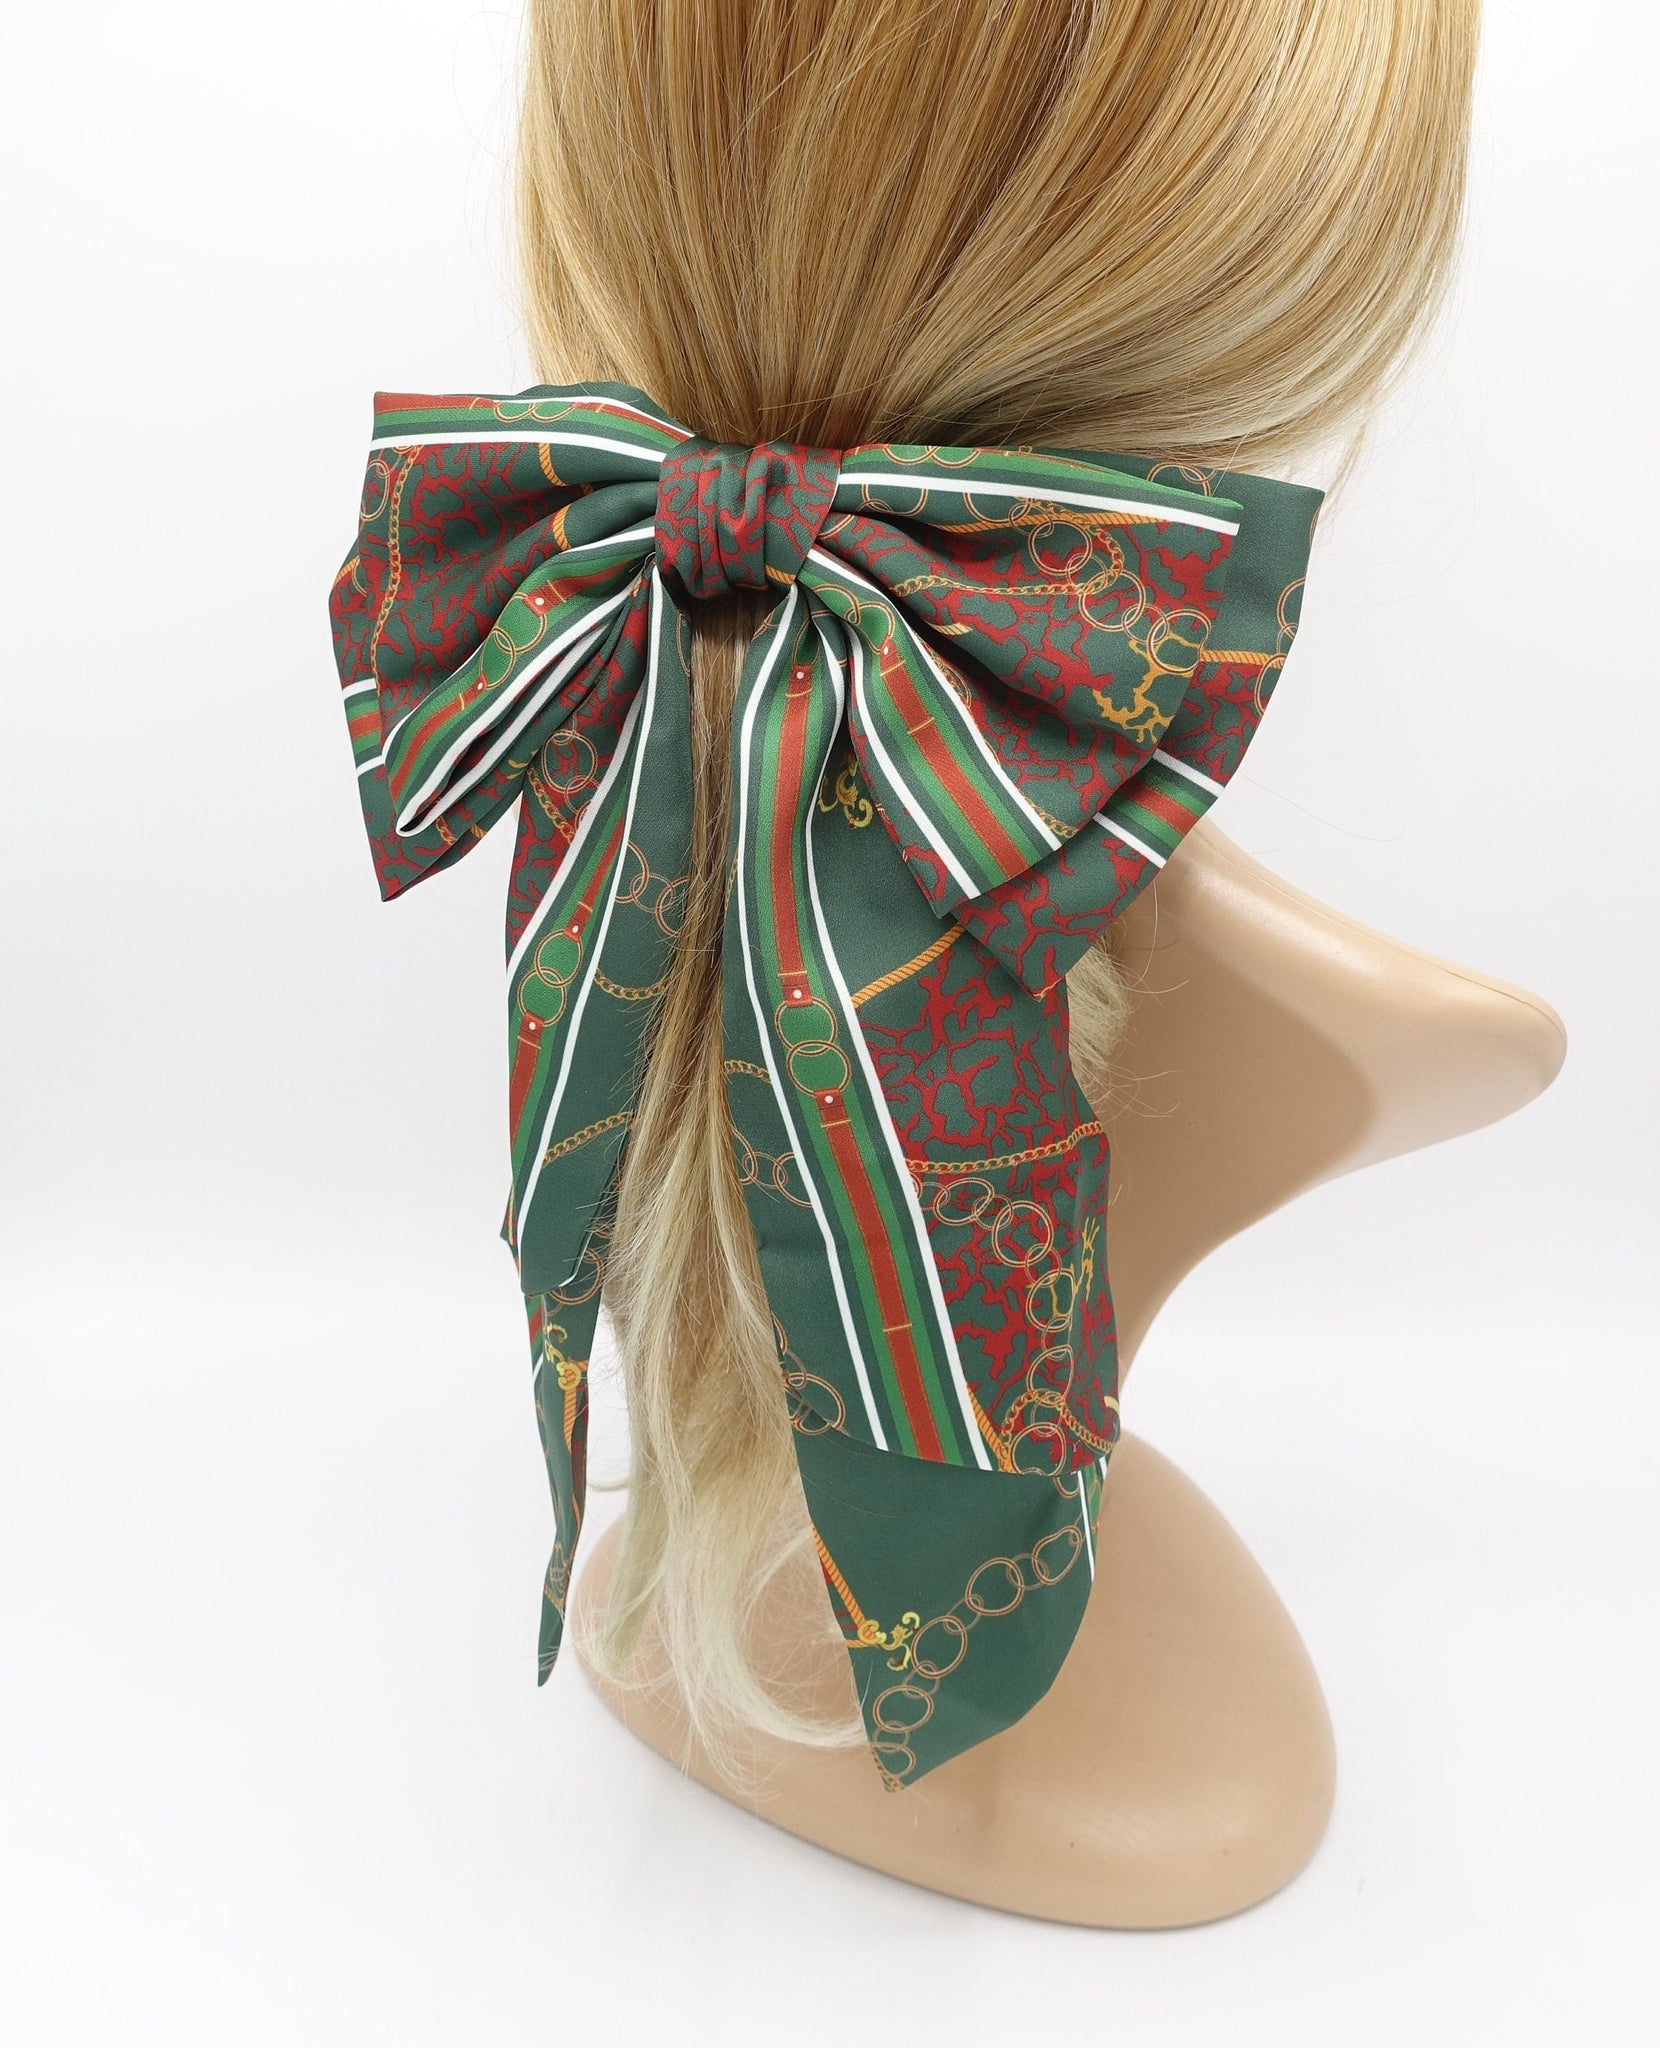 veryshine.com Barrette (Bow) Green satin hair bow chain belt print hair accessory for women